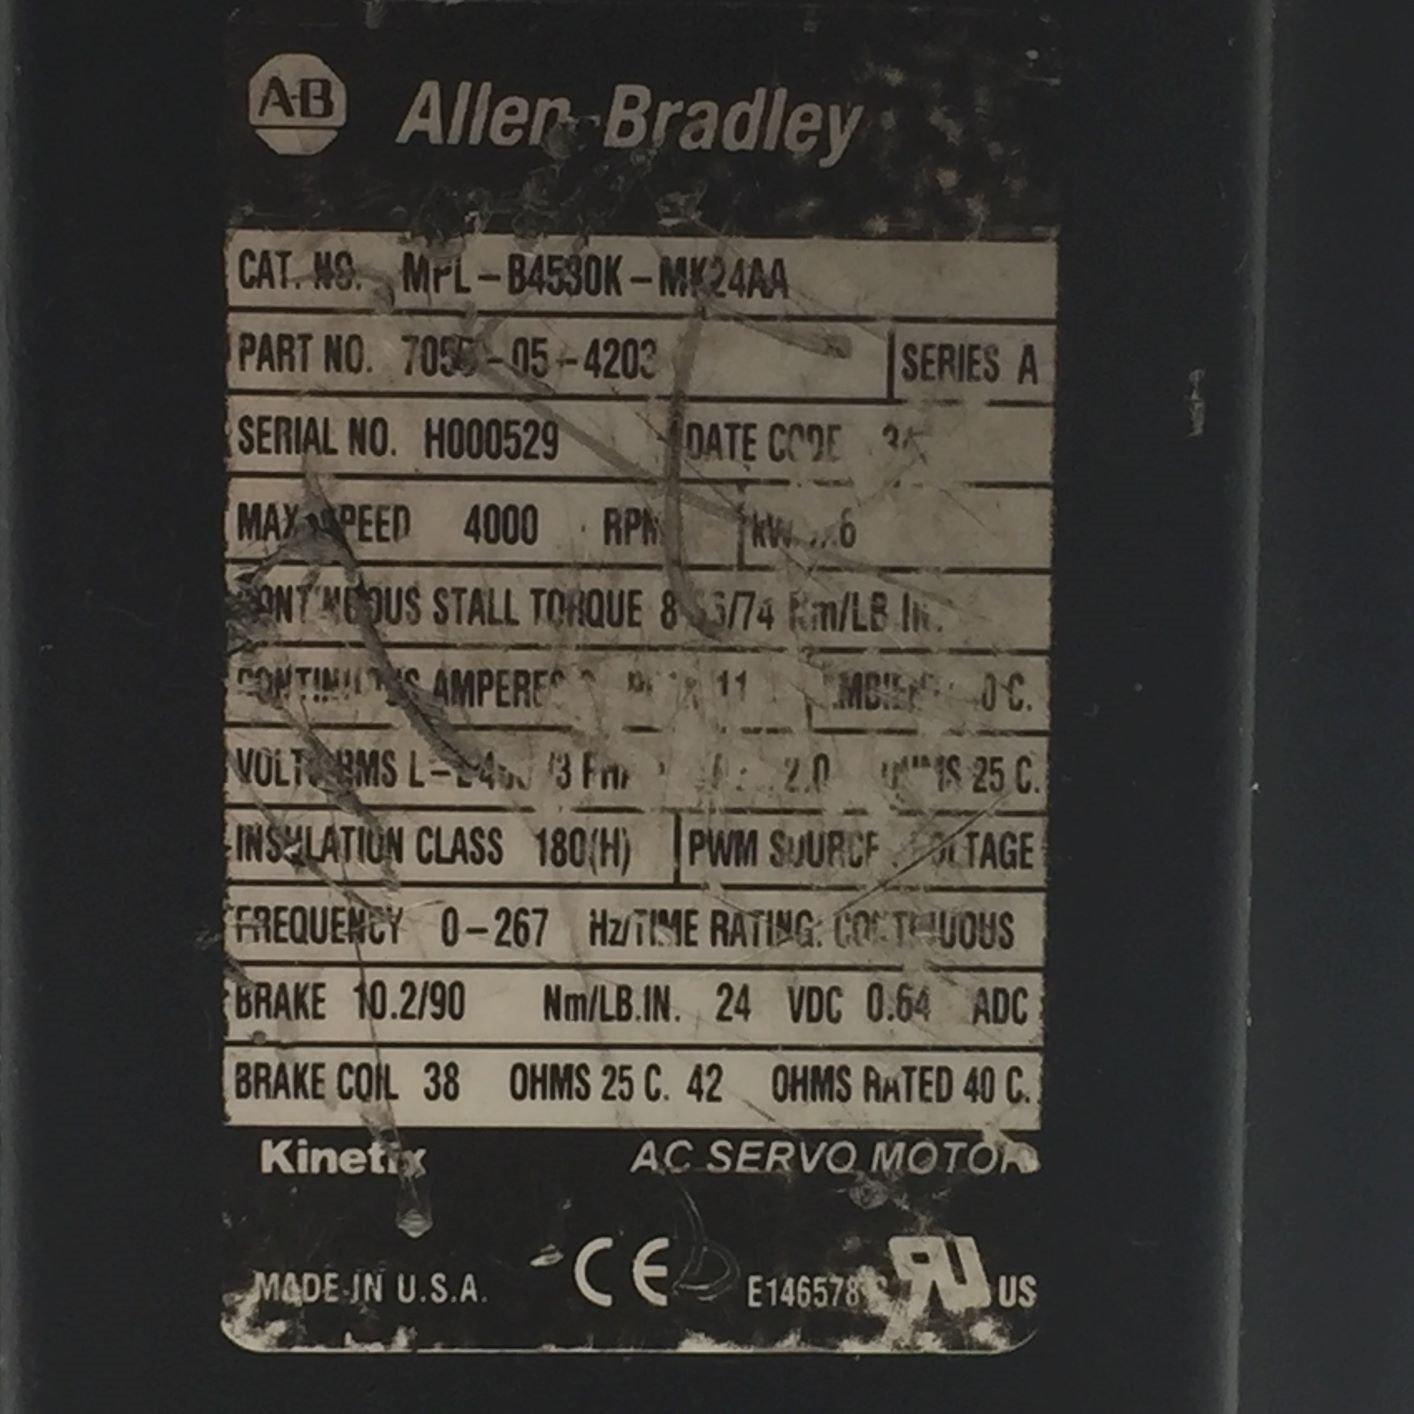 Allen-Bradley MPL-B4530K-MK24AA Servo MOTOR Kinetix AC TESTED 